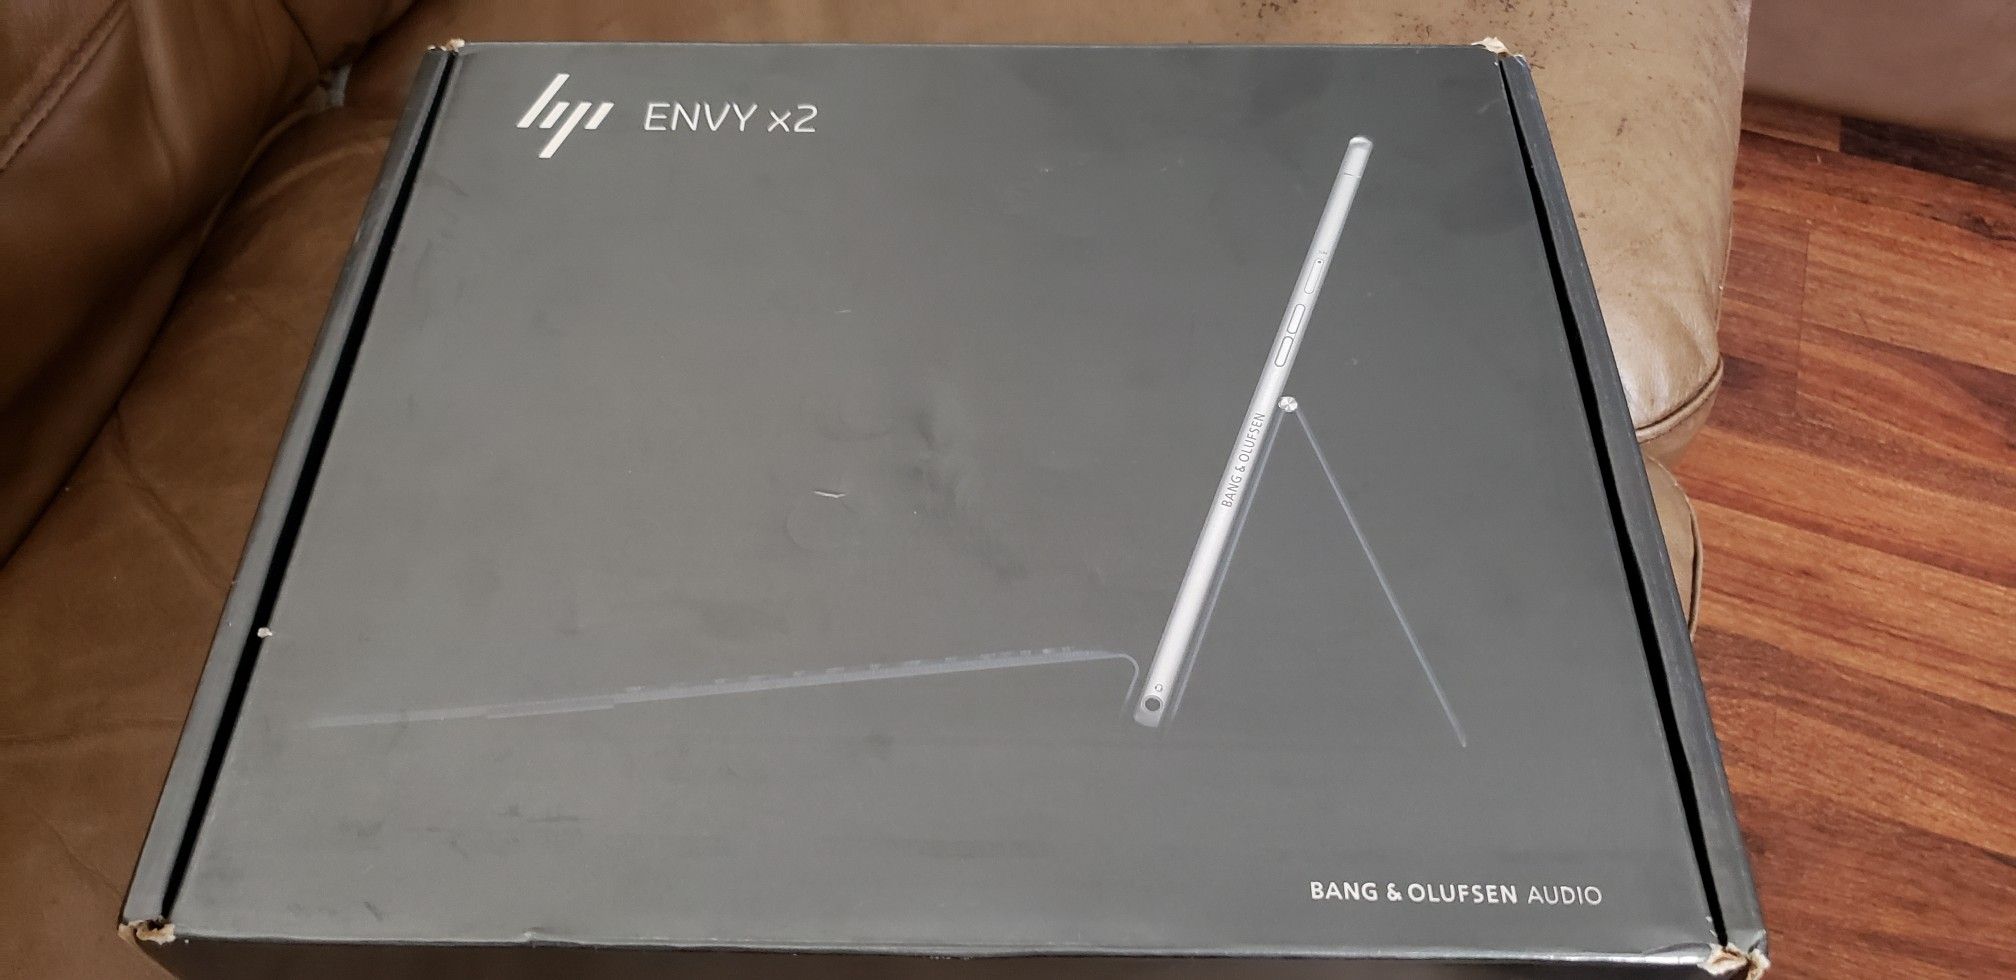 Hp envy x2 12 inch Detachable laptop with stylus pen 4g lte 256 gb new